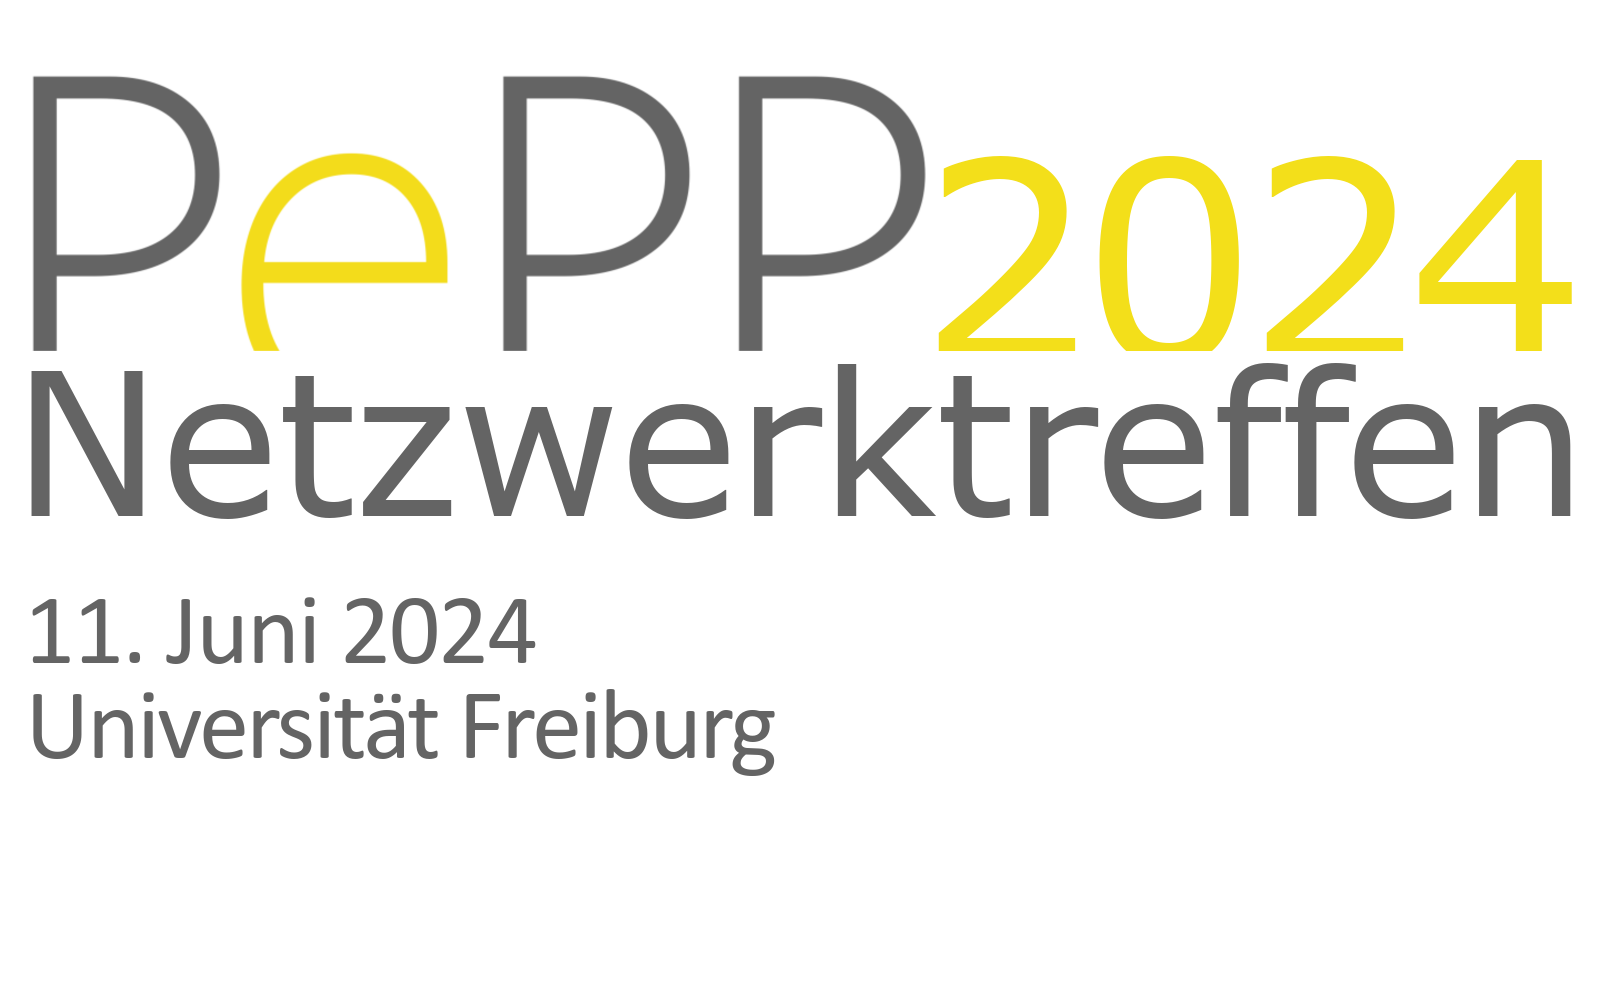 PePP Netzwerktreffen 2024 Logo